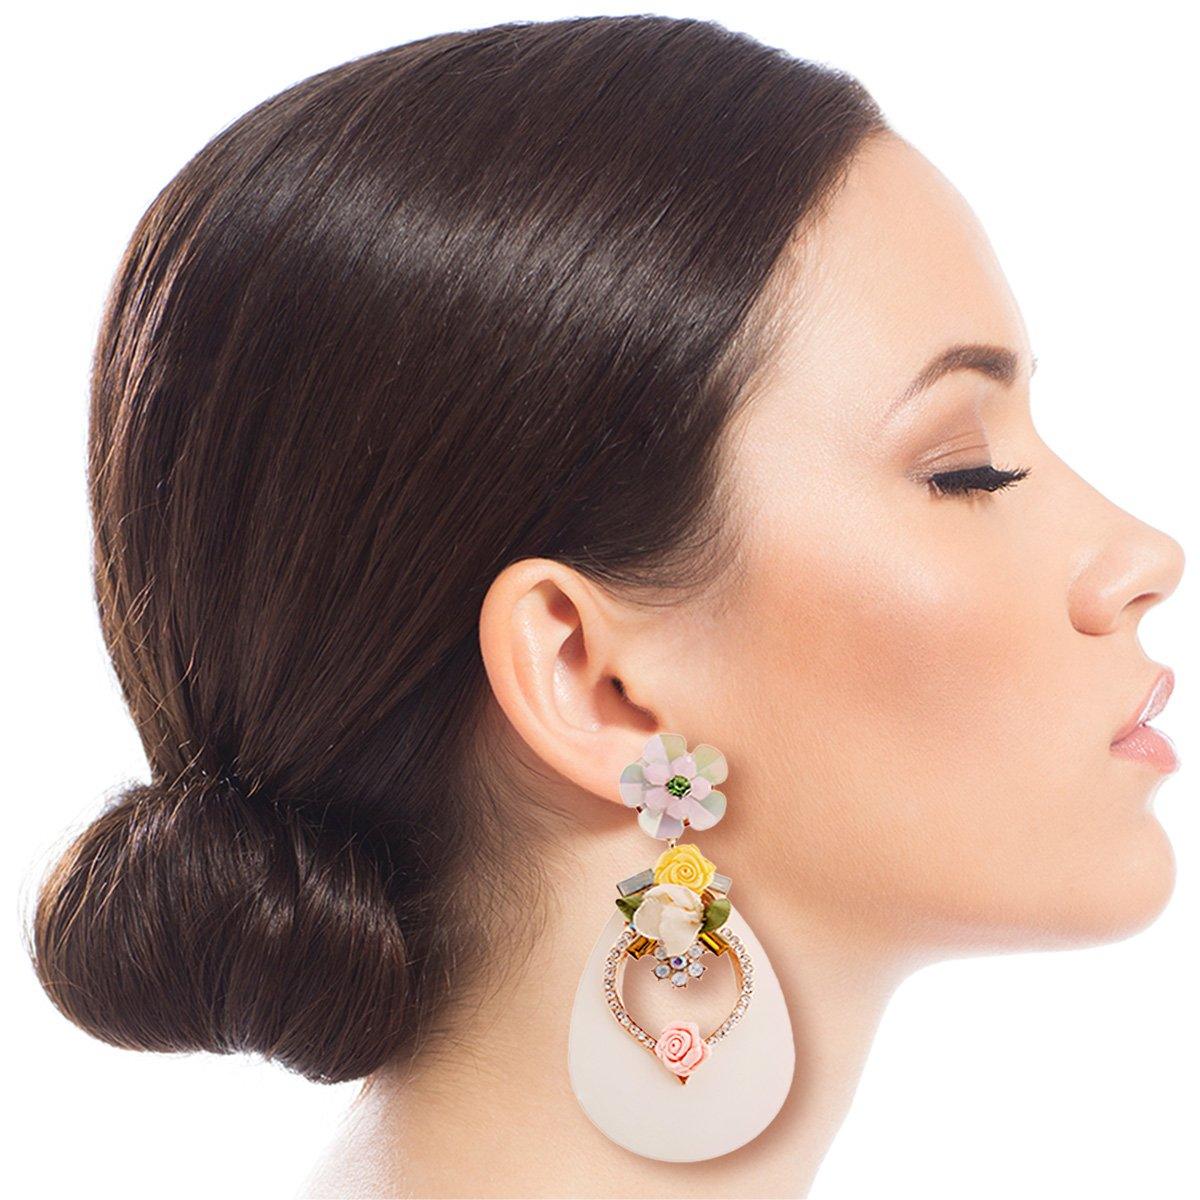 Cream Teardrop Earrings with Rhinestone and Flower Detail